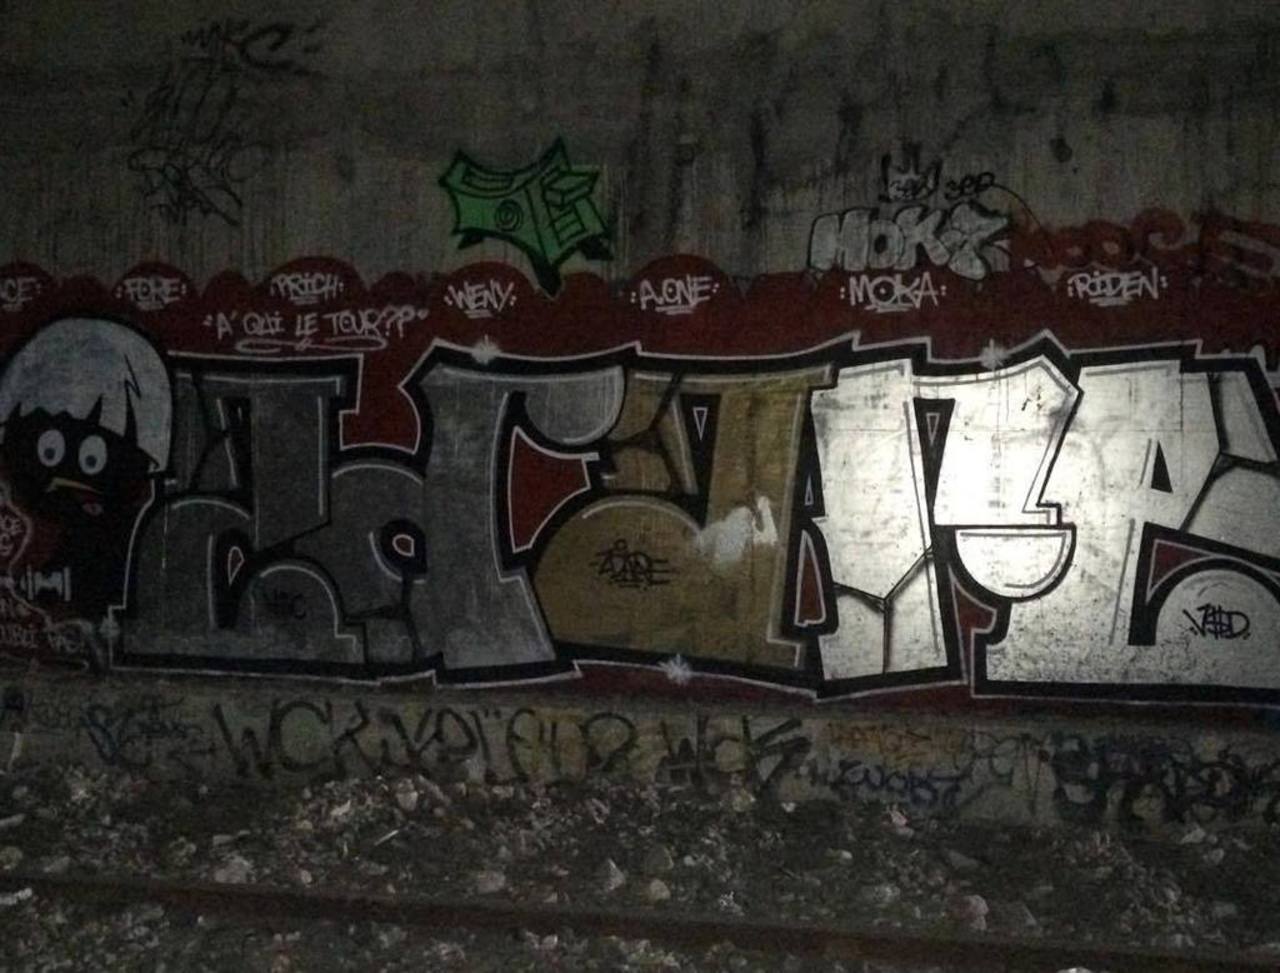 via #insta_fdy "http://bit.ly/1iYGkKo" #graffiti #streetart http://t.co/1xWhDpH8TB